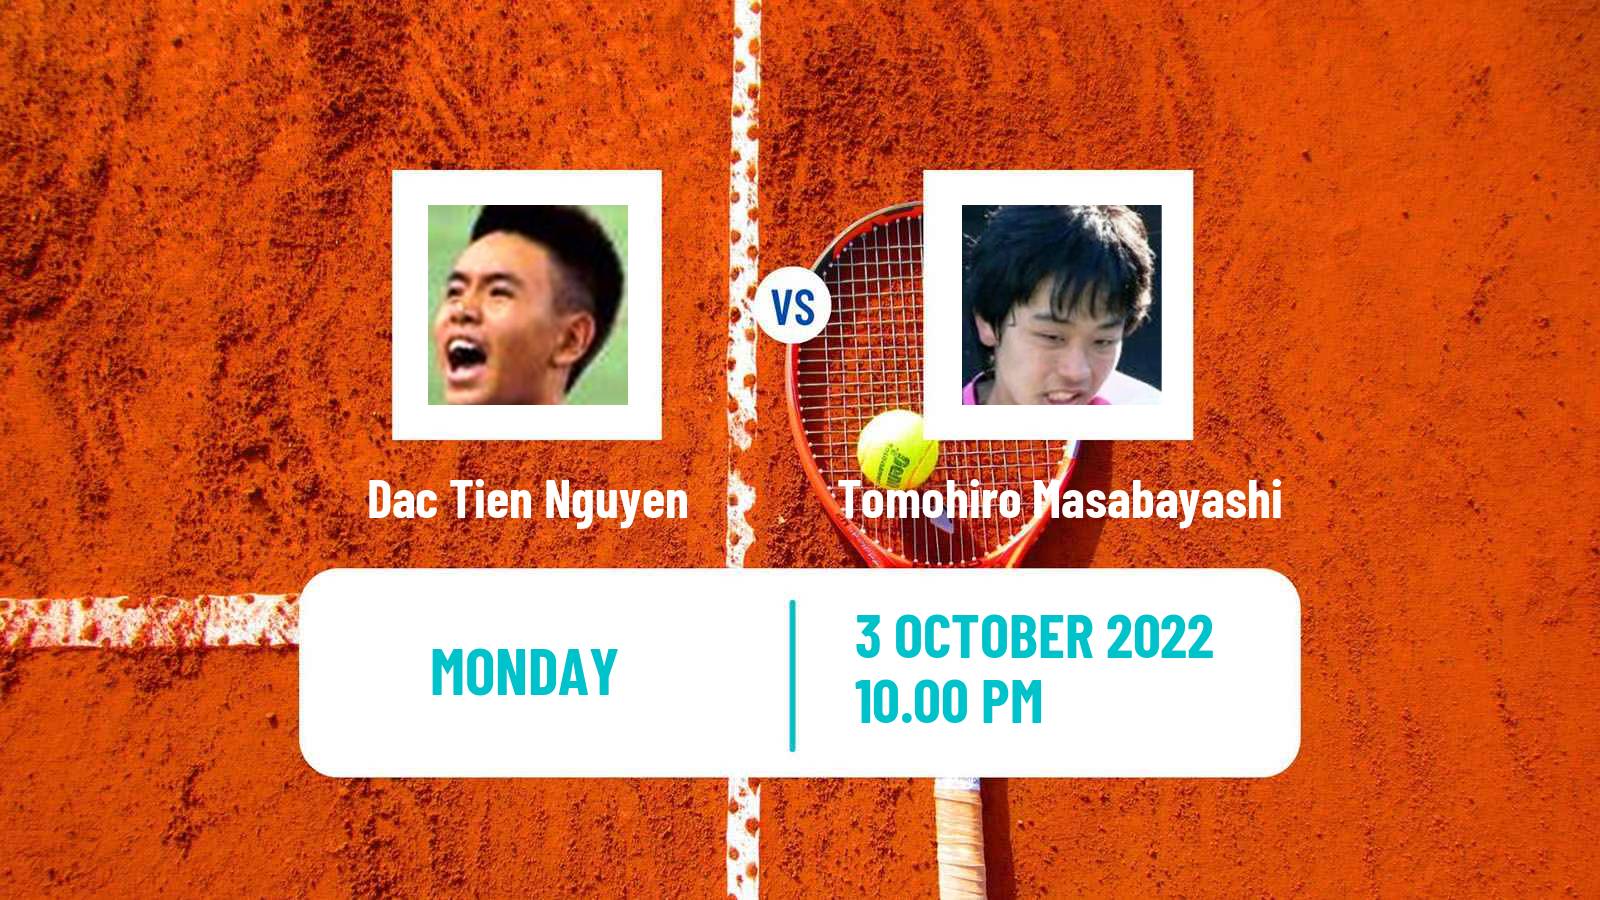 Tennis ITF Tournaments Dac Tien Nguyen - Tomohiro Masabayashi